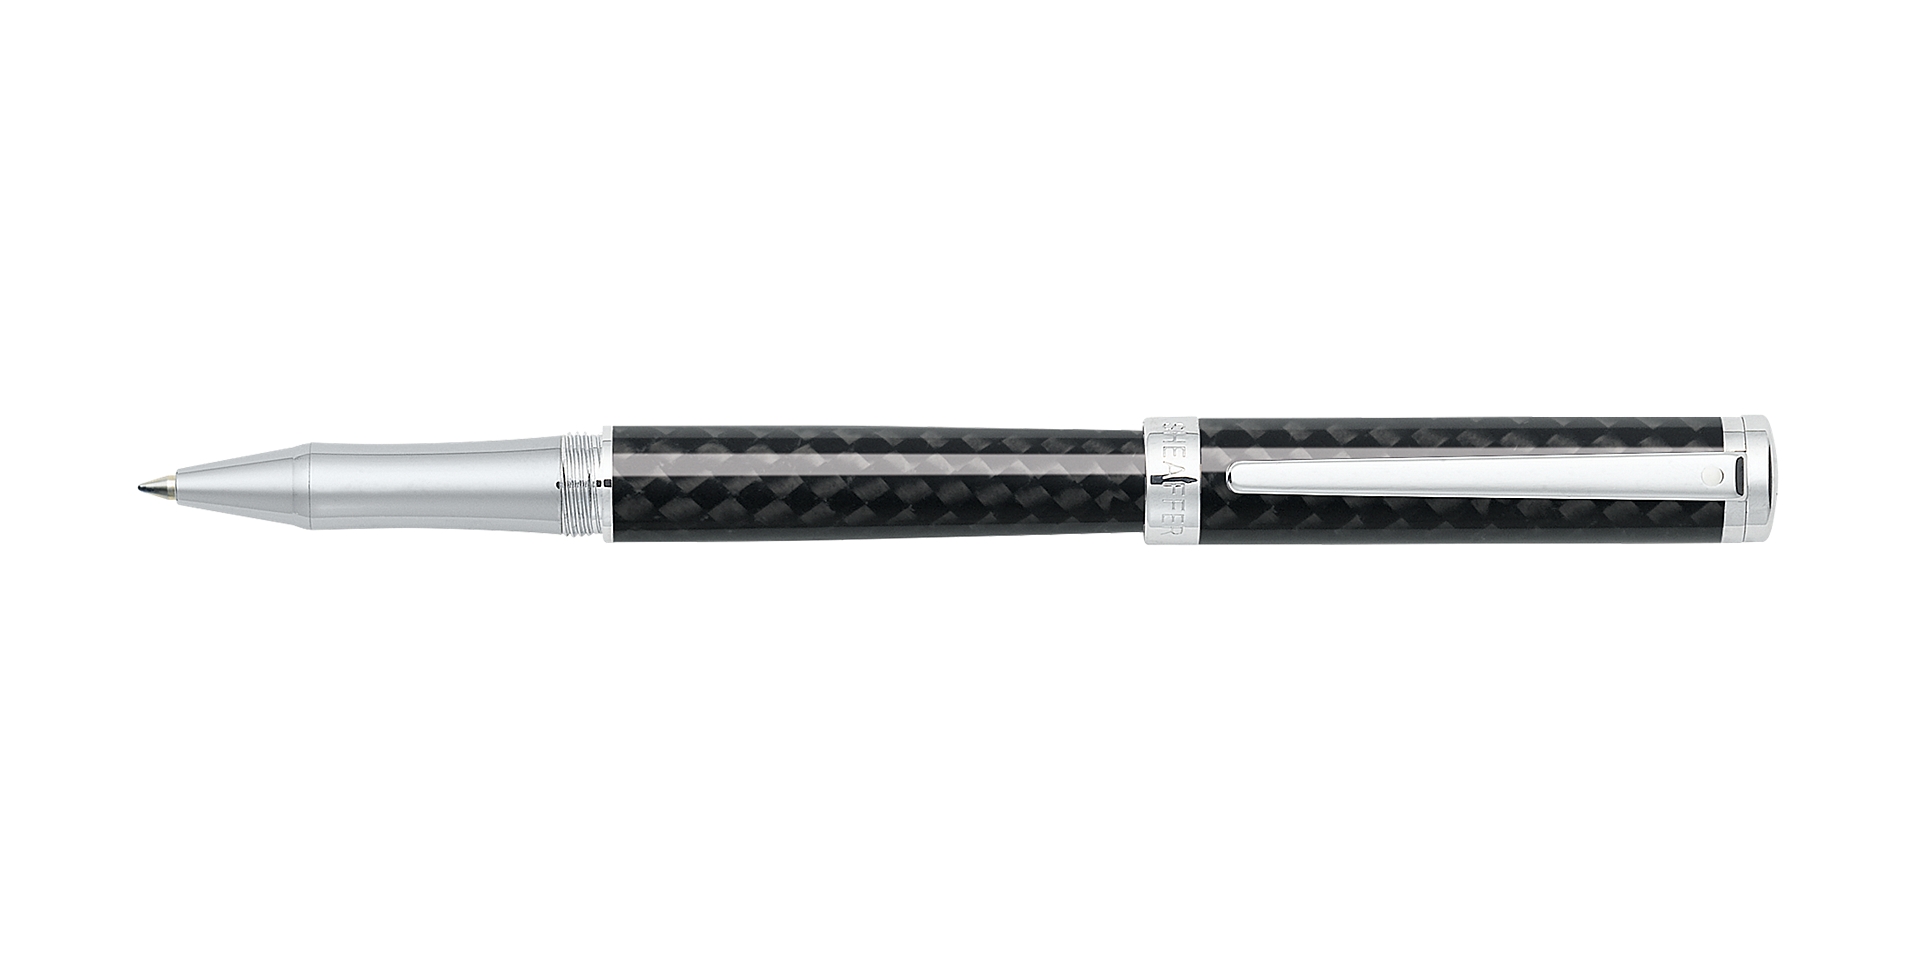  Sheaffer® Intensity® Carbon Fiber Rollerball Pen